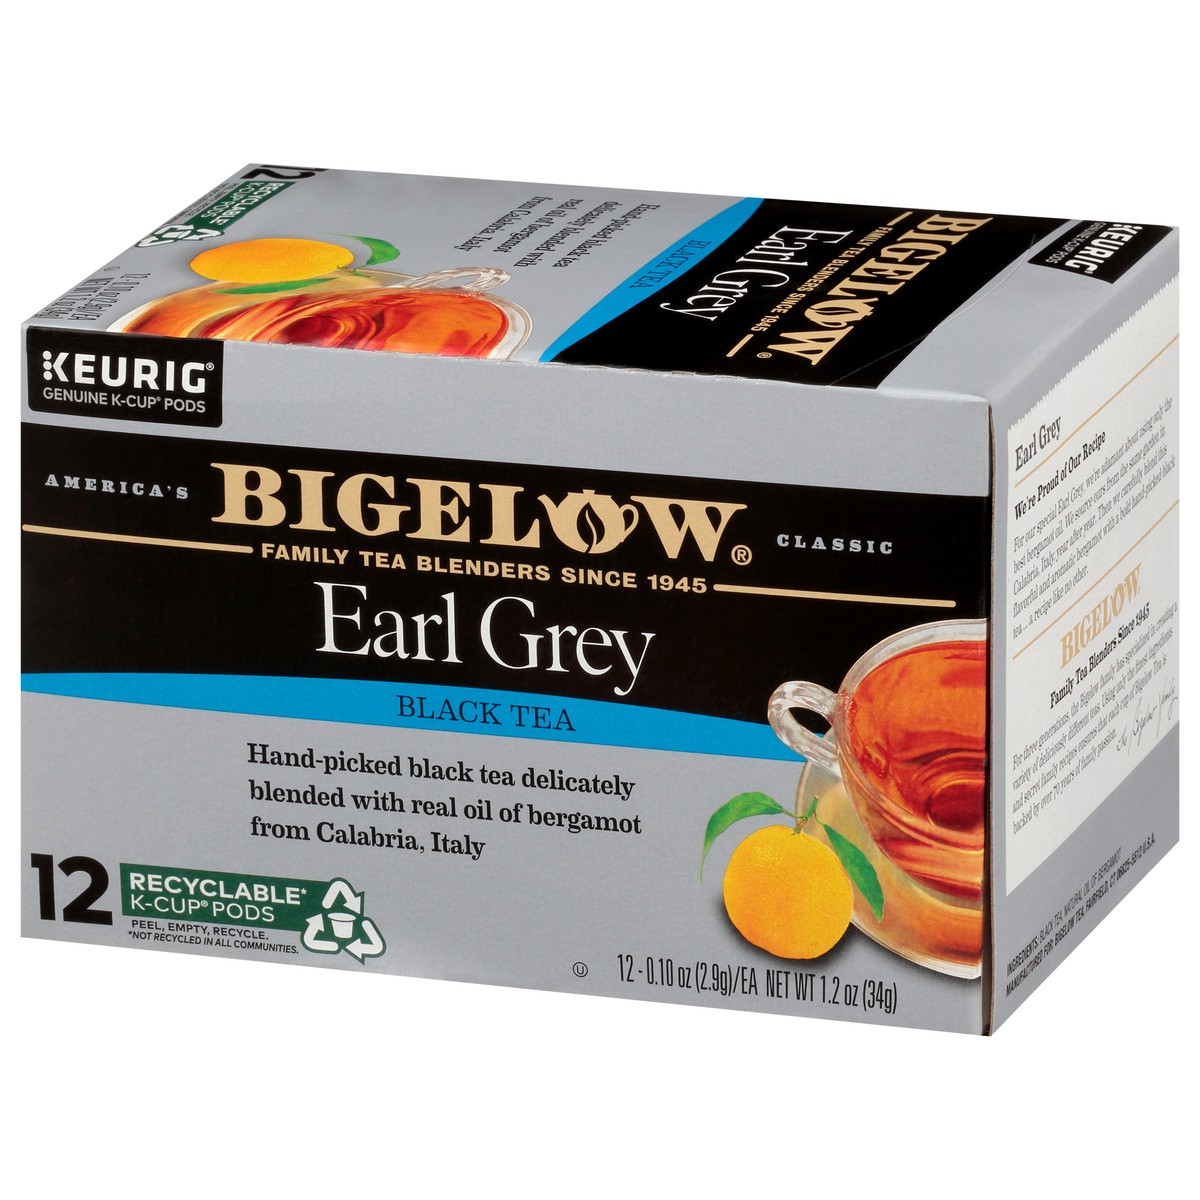 slide 4 of 13, Bigelow Earl Grey Black Tea 12 ct K-Cup Pods 1.2 oz. Box - 12 ct, 12 ct